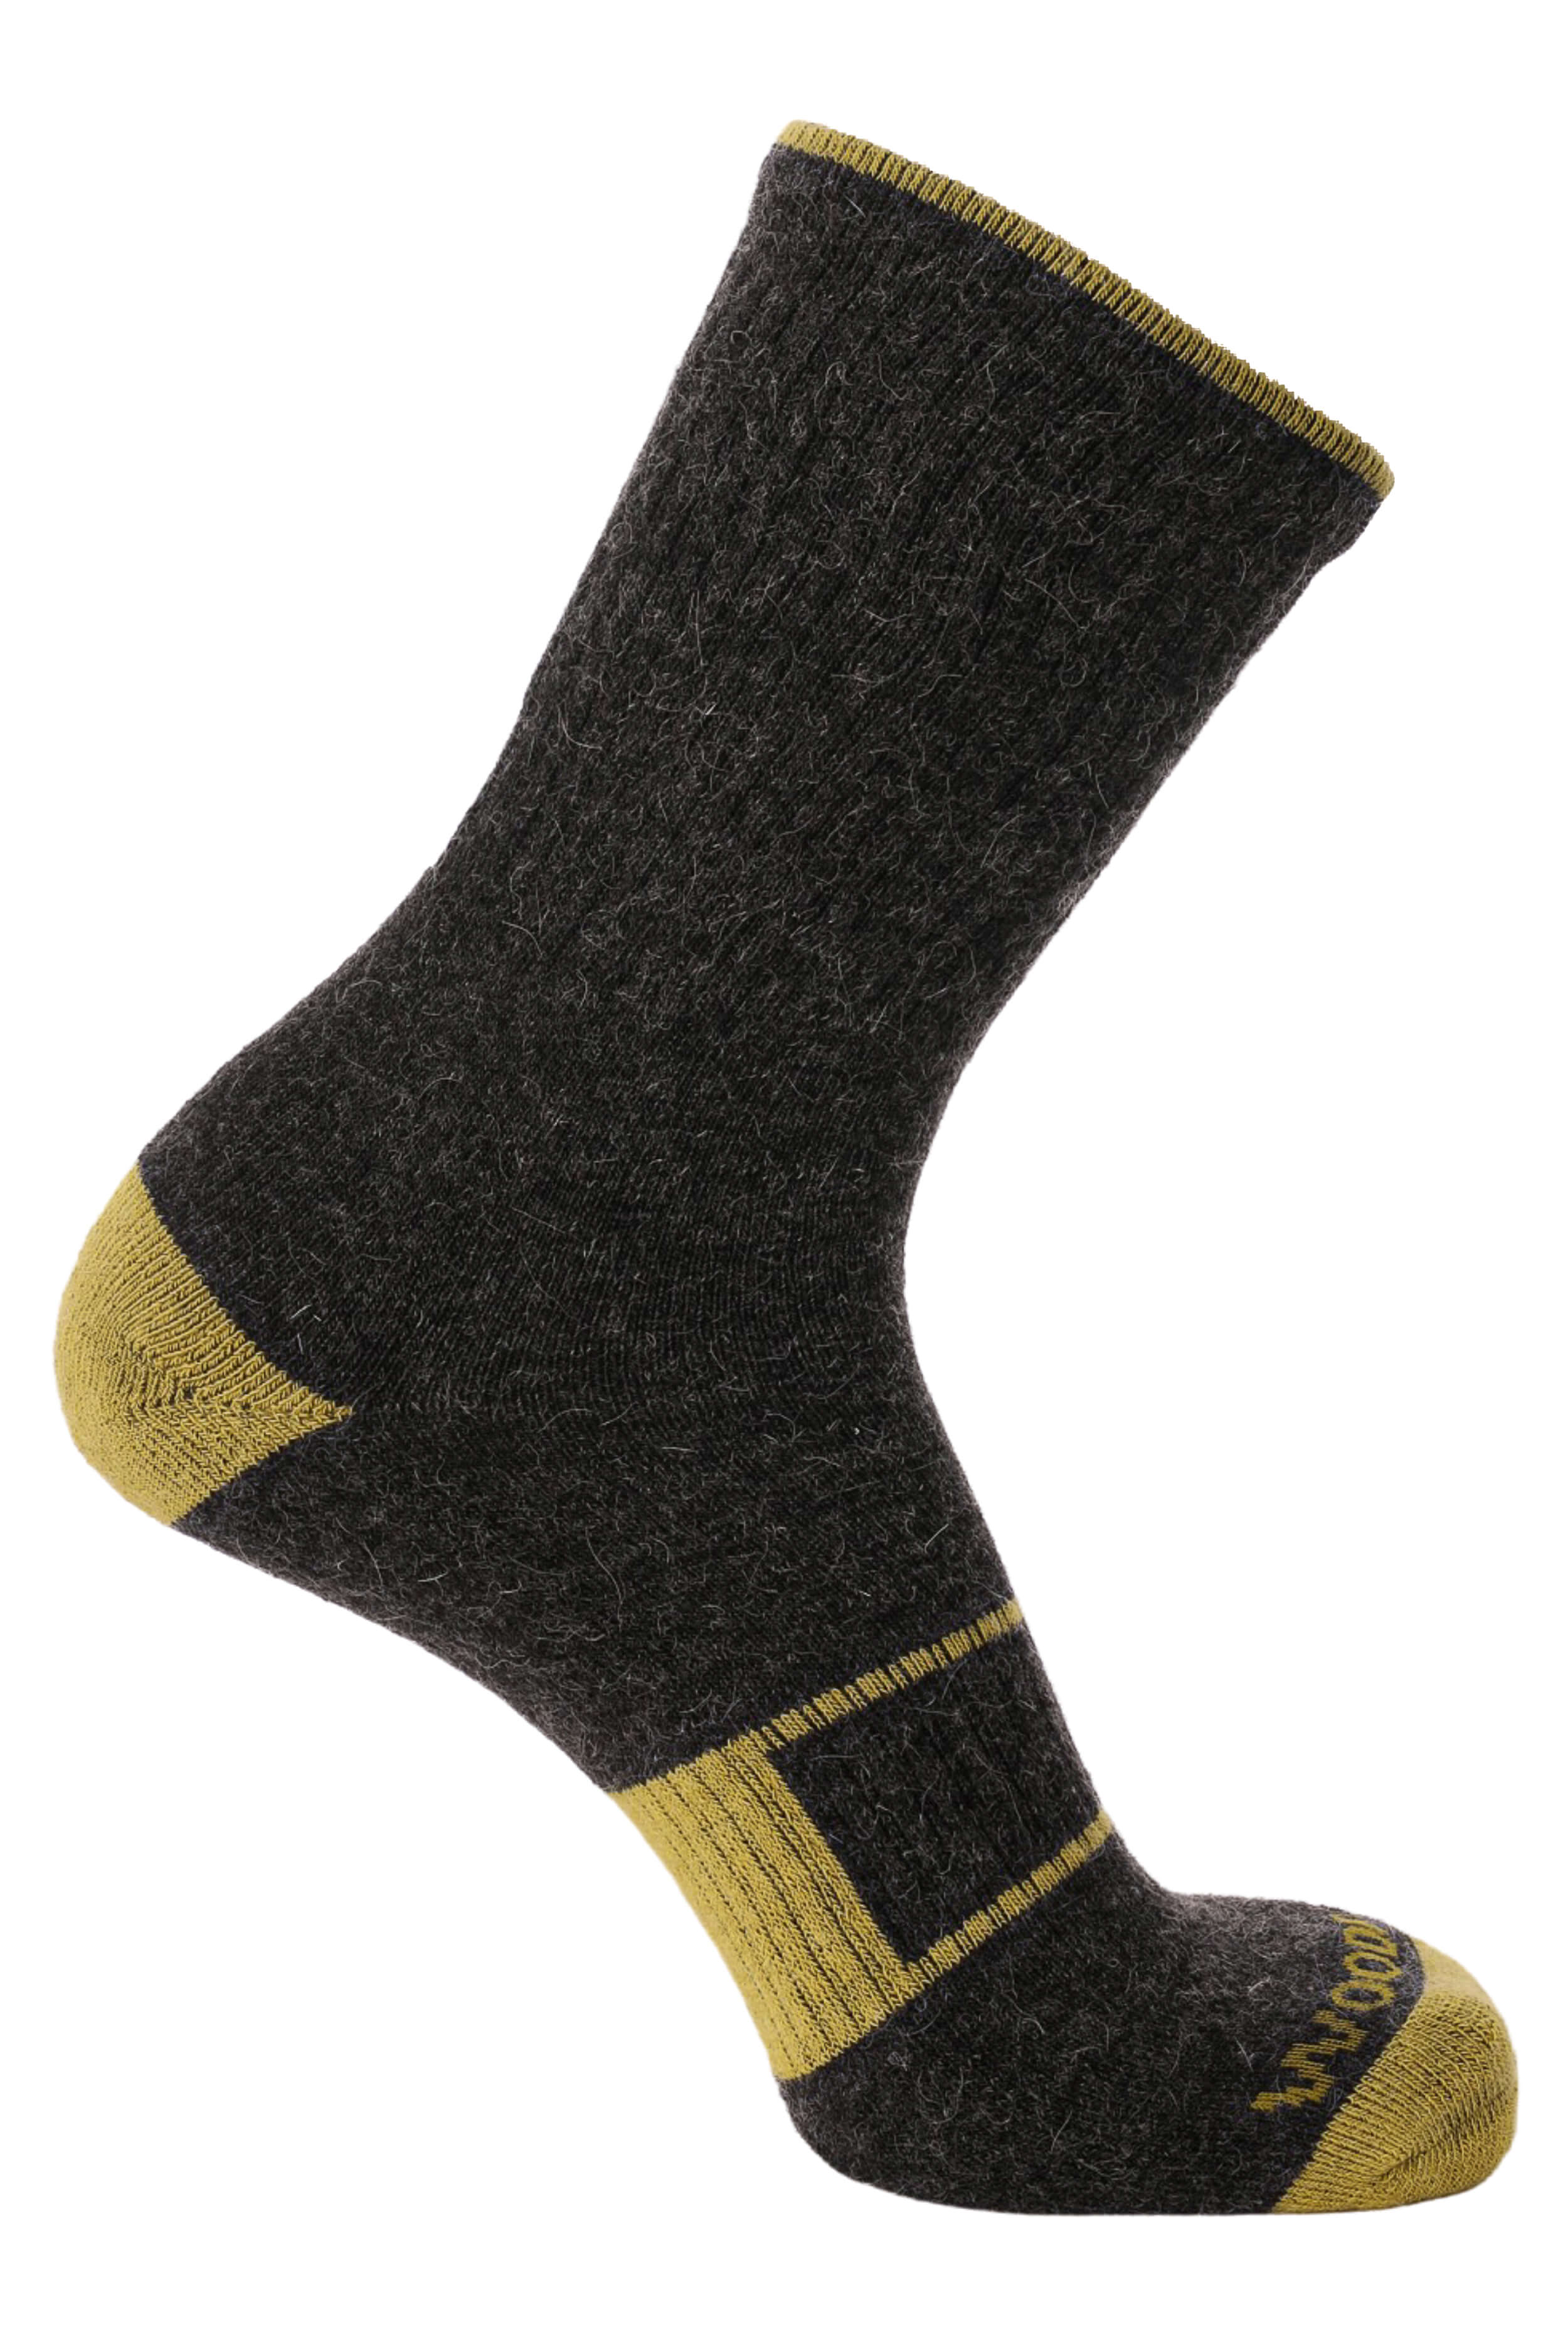 Nada Llama Crew Socks - Alpaca Socks -Granite Yellow - Woodroad Gear Co.